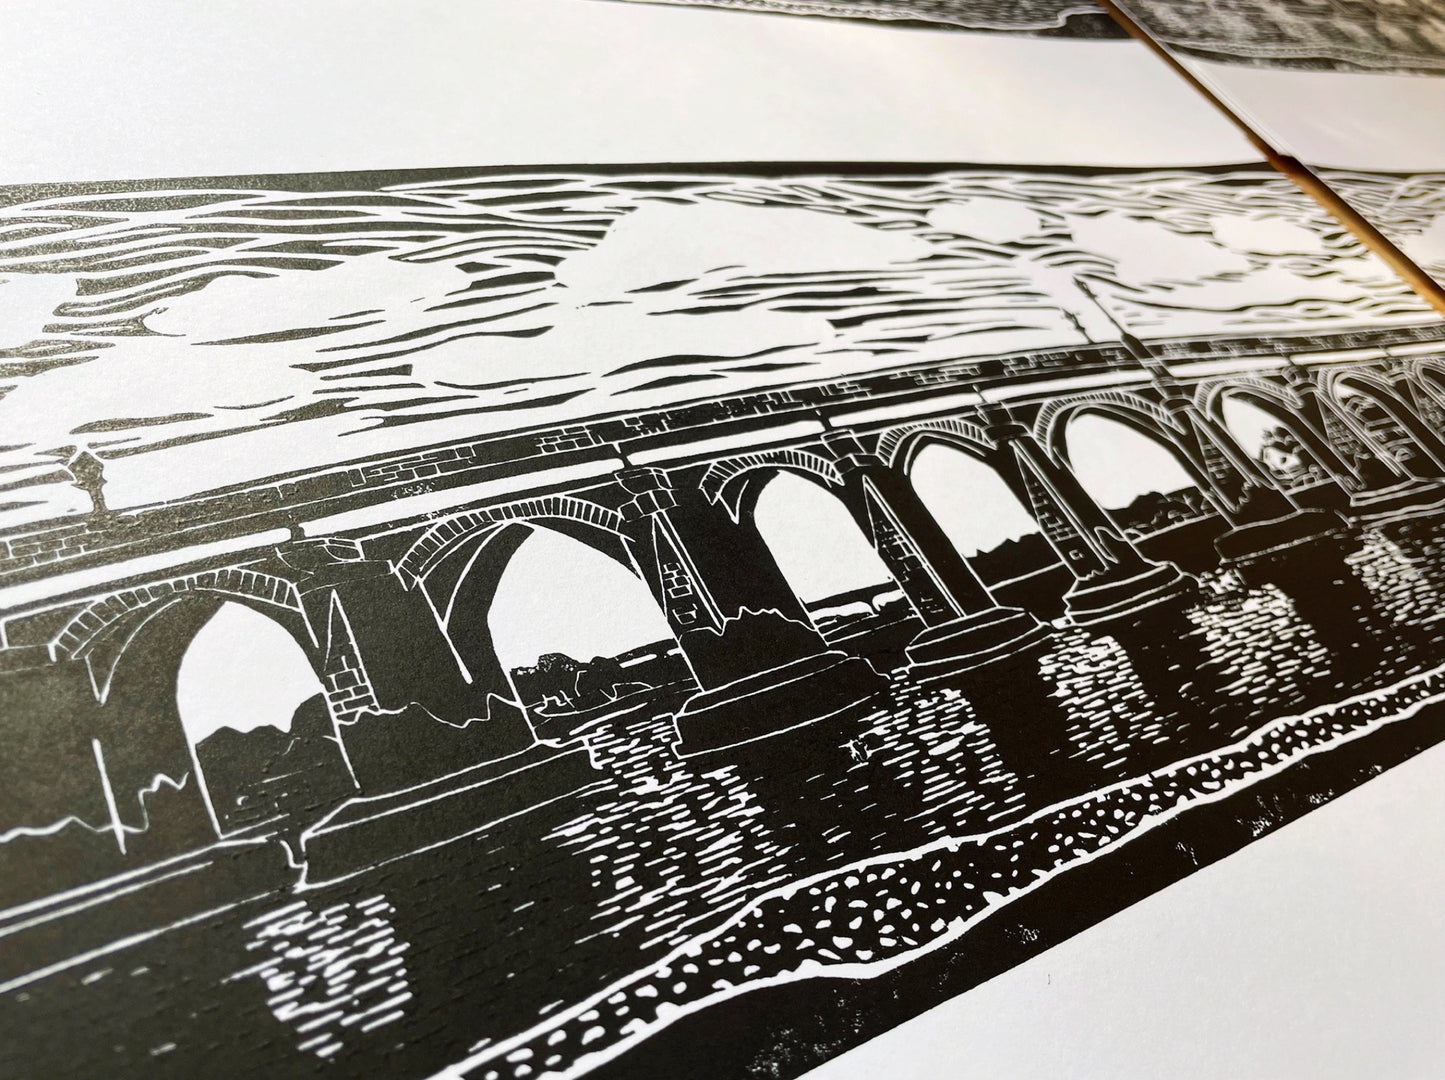 Bideford Bridge Linocut Print